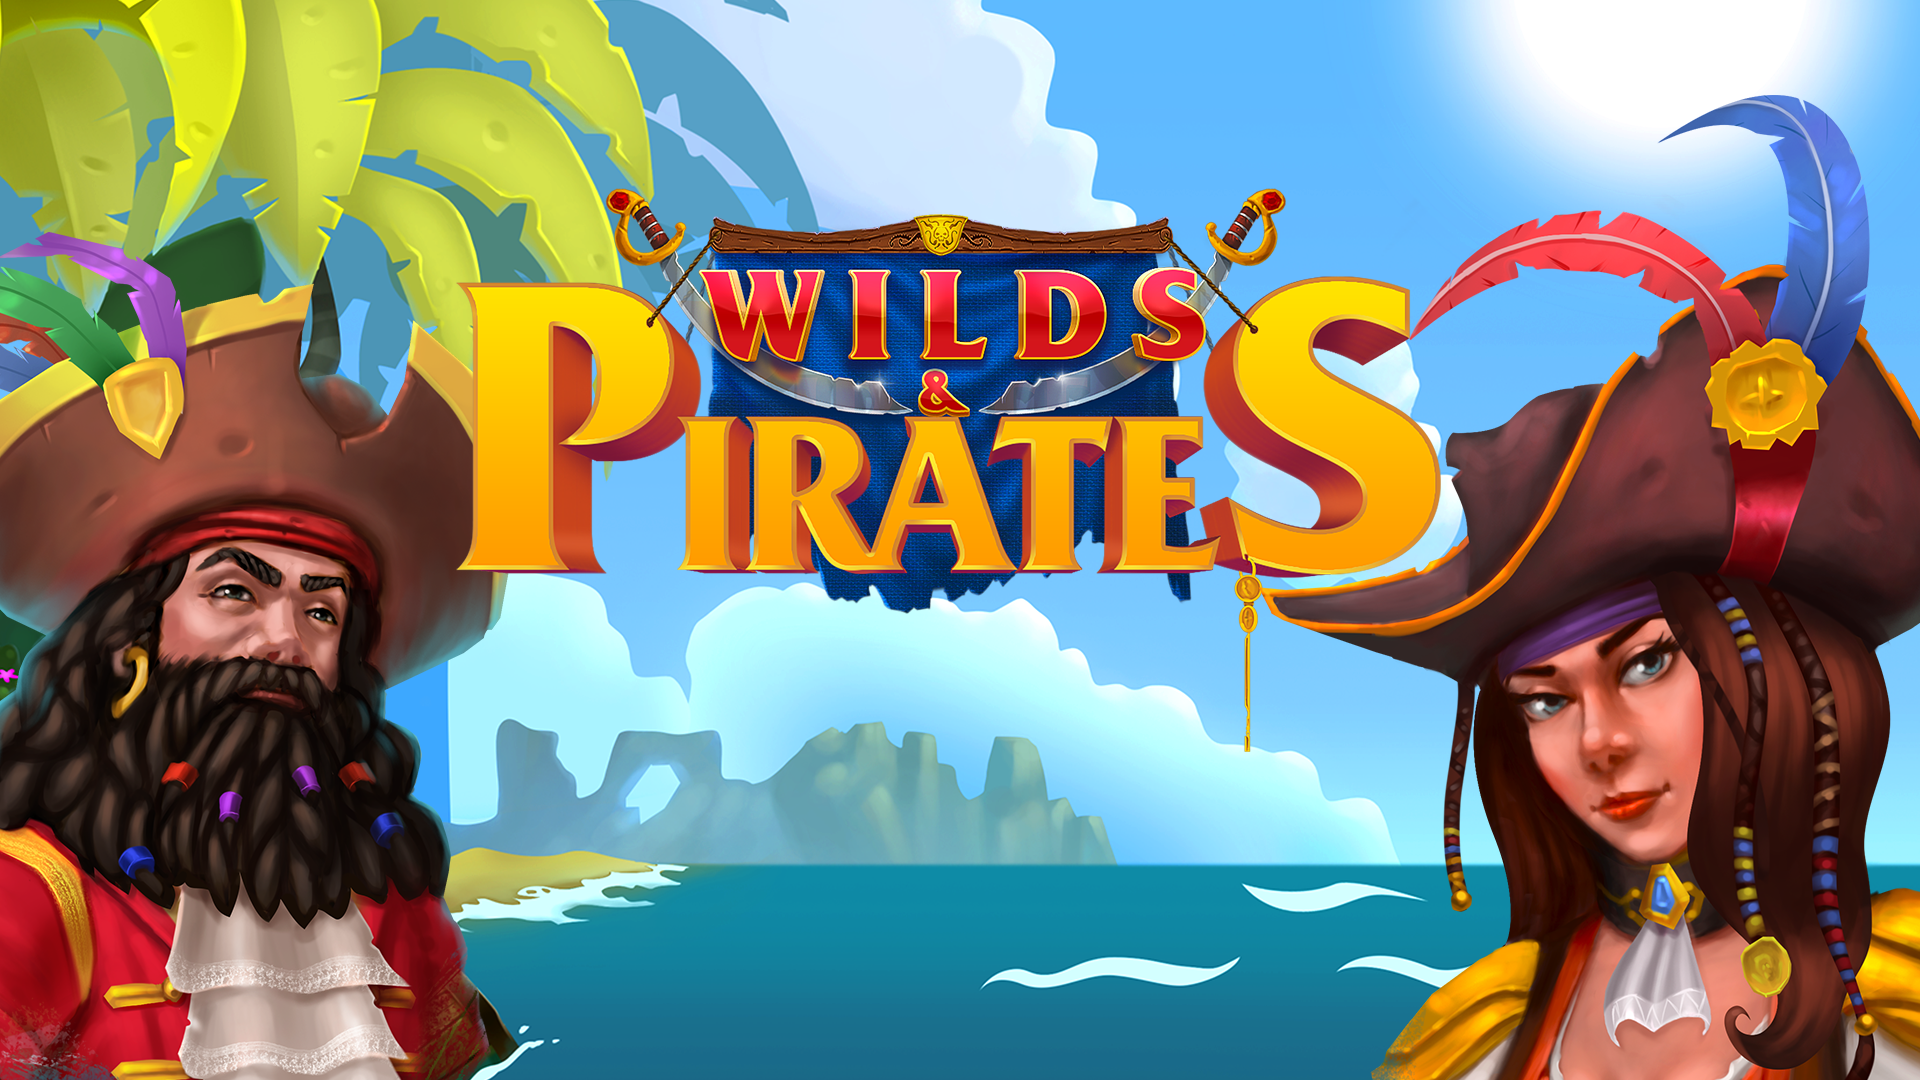 Wilds & Pirates playnow